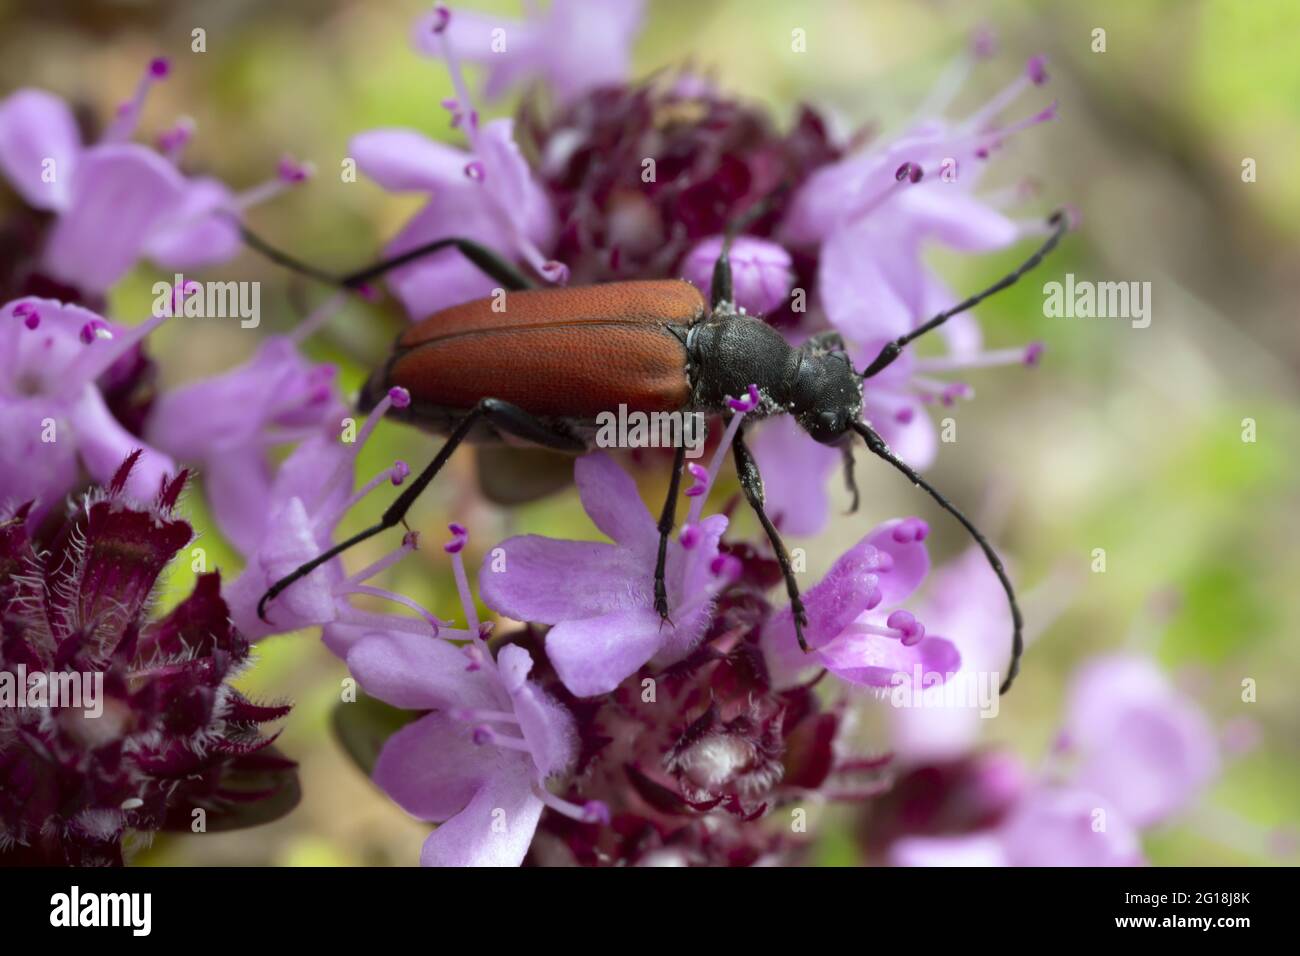 Anastrangalia long horn beetle feeding on breckland thyme Stock Photo